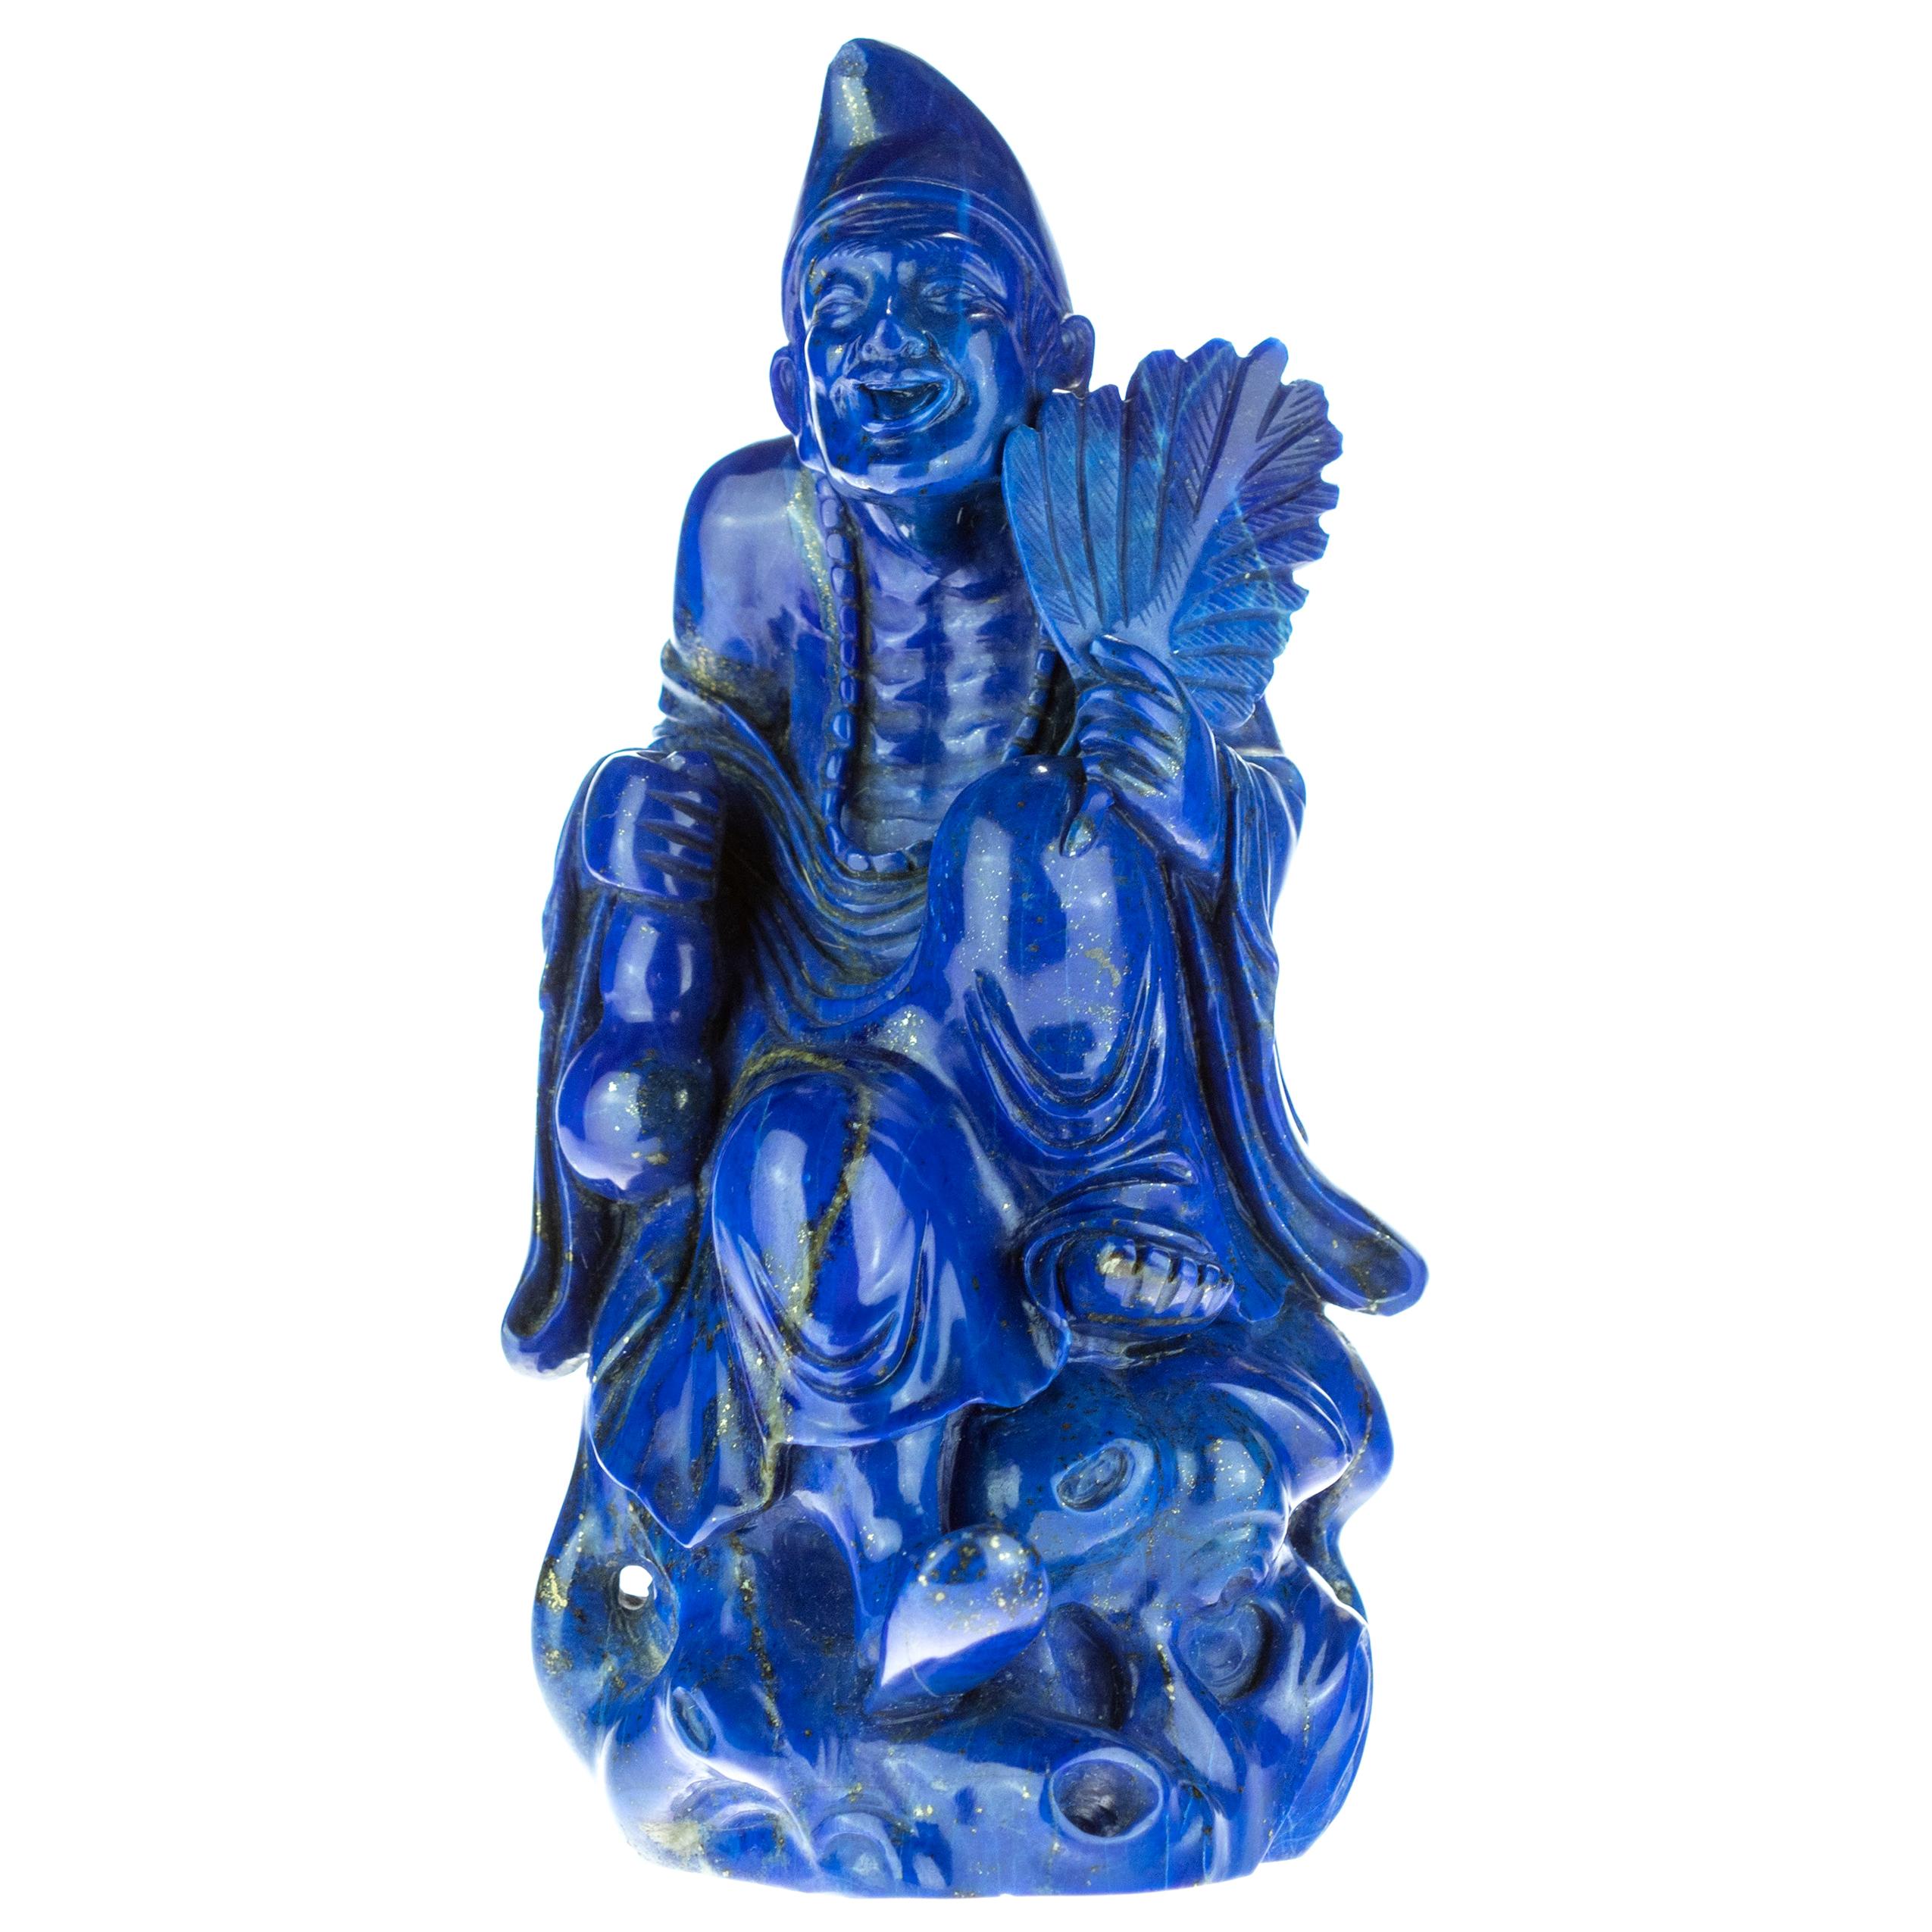 Lapis Lazuli Laughing Man Carved Figure Spiritual Artisanal Statue Sculpture For Sale